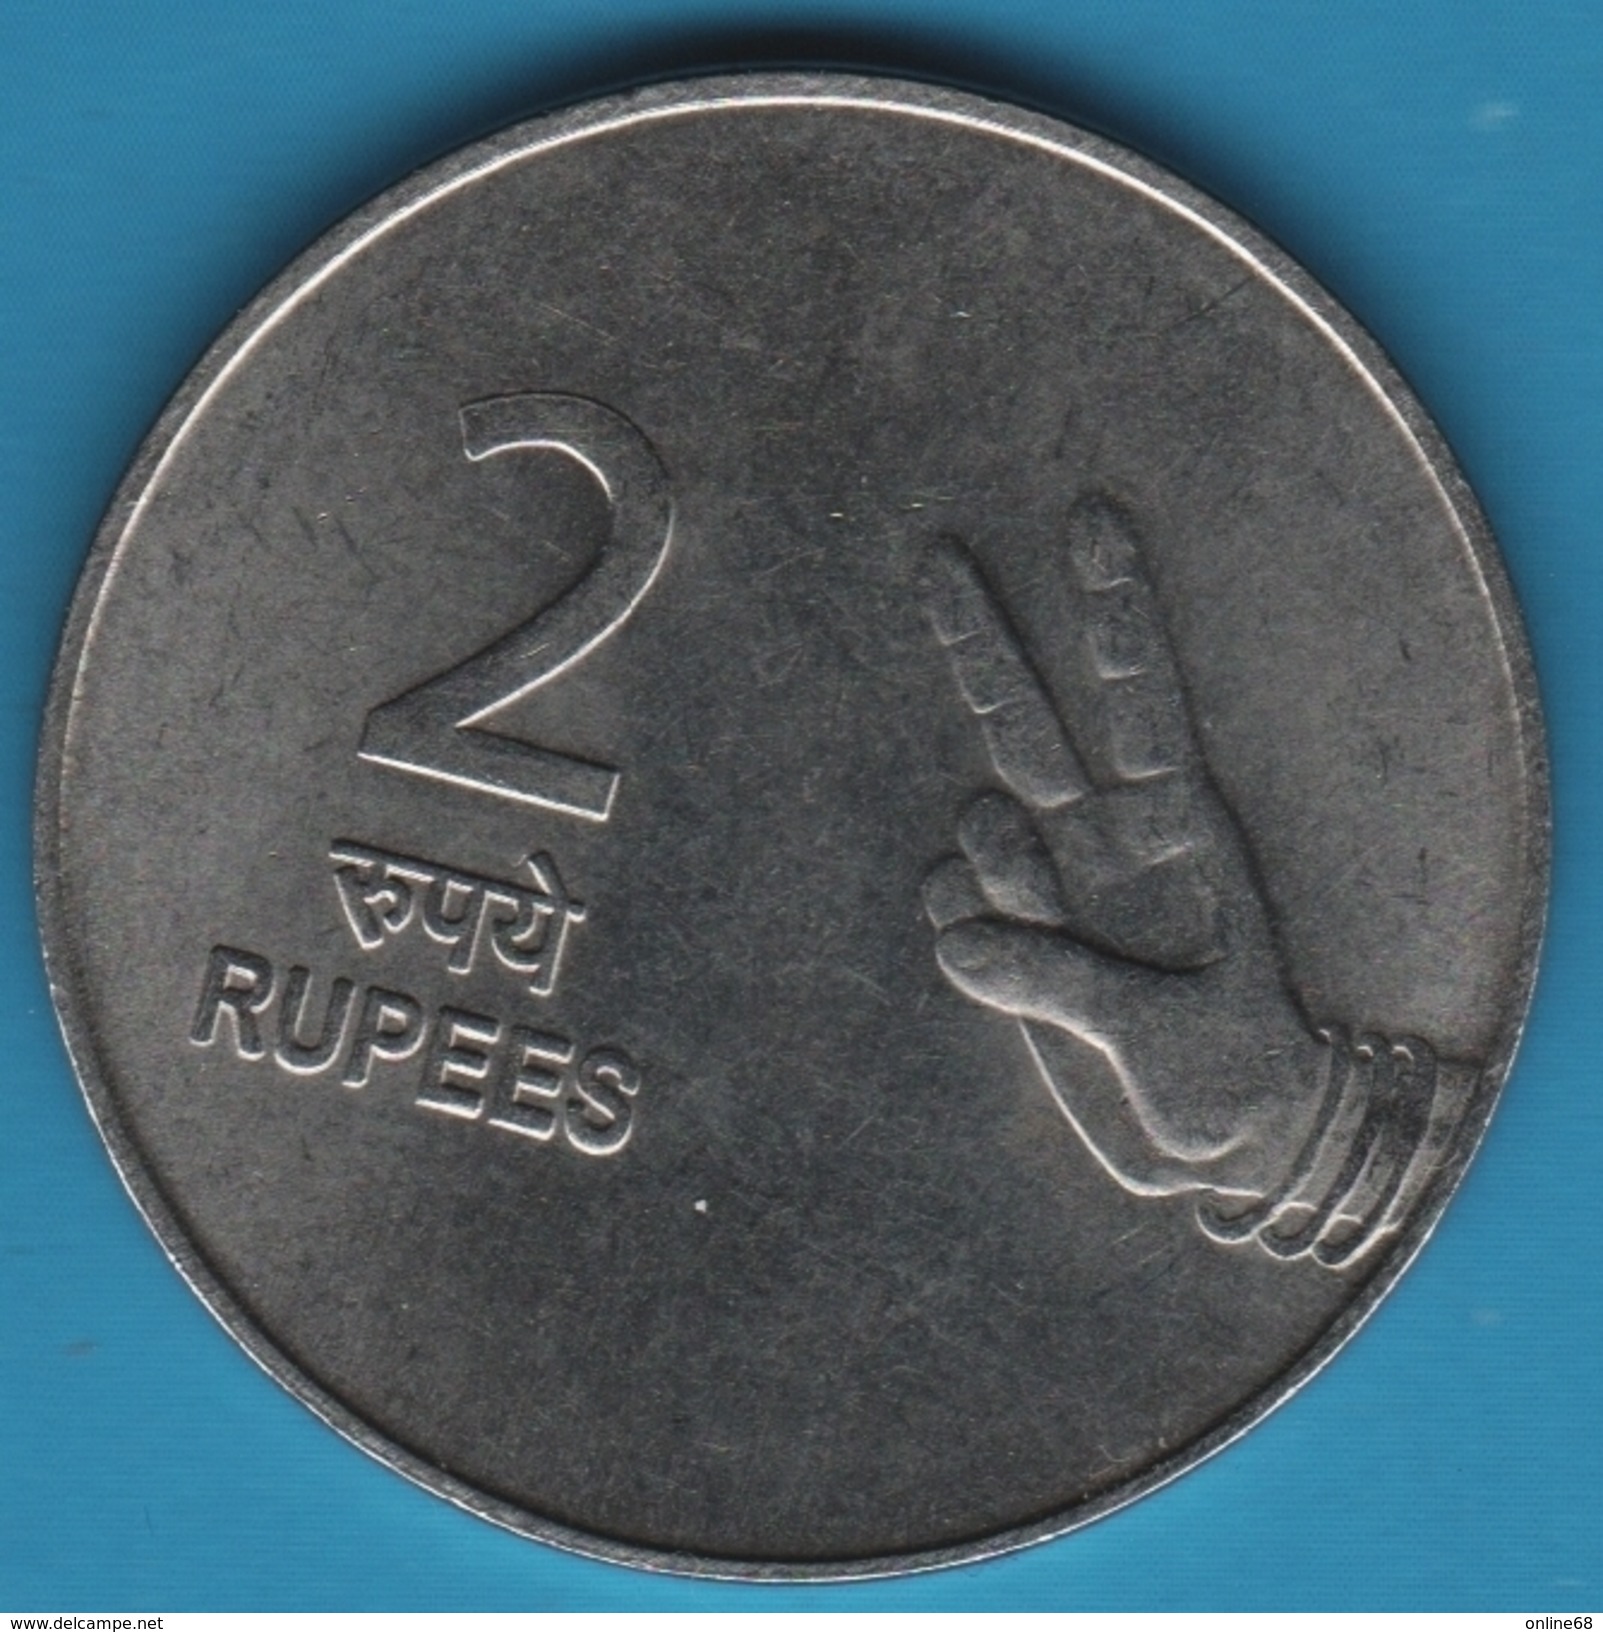 INDIA 2 RUPEES 2007 &diams;  KM# 327 - India